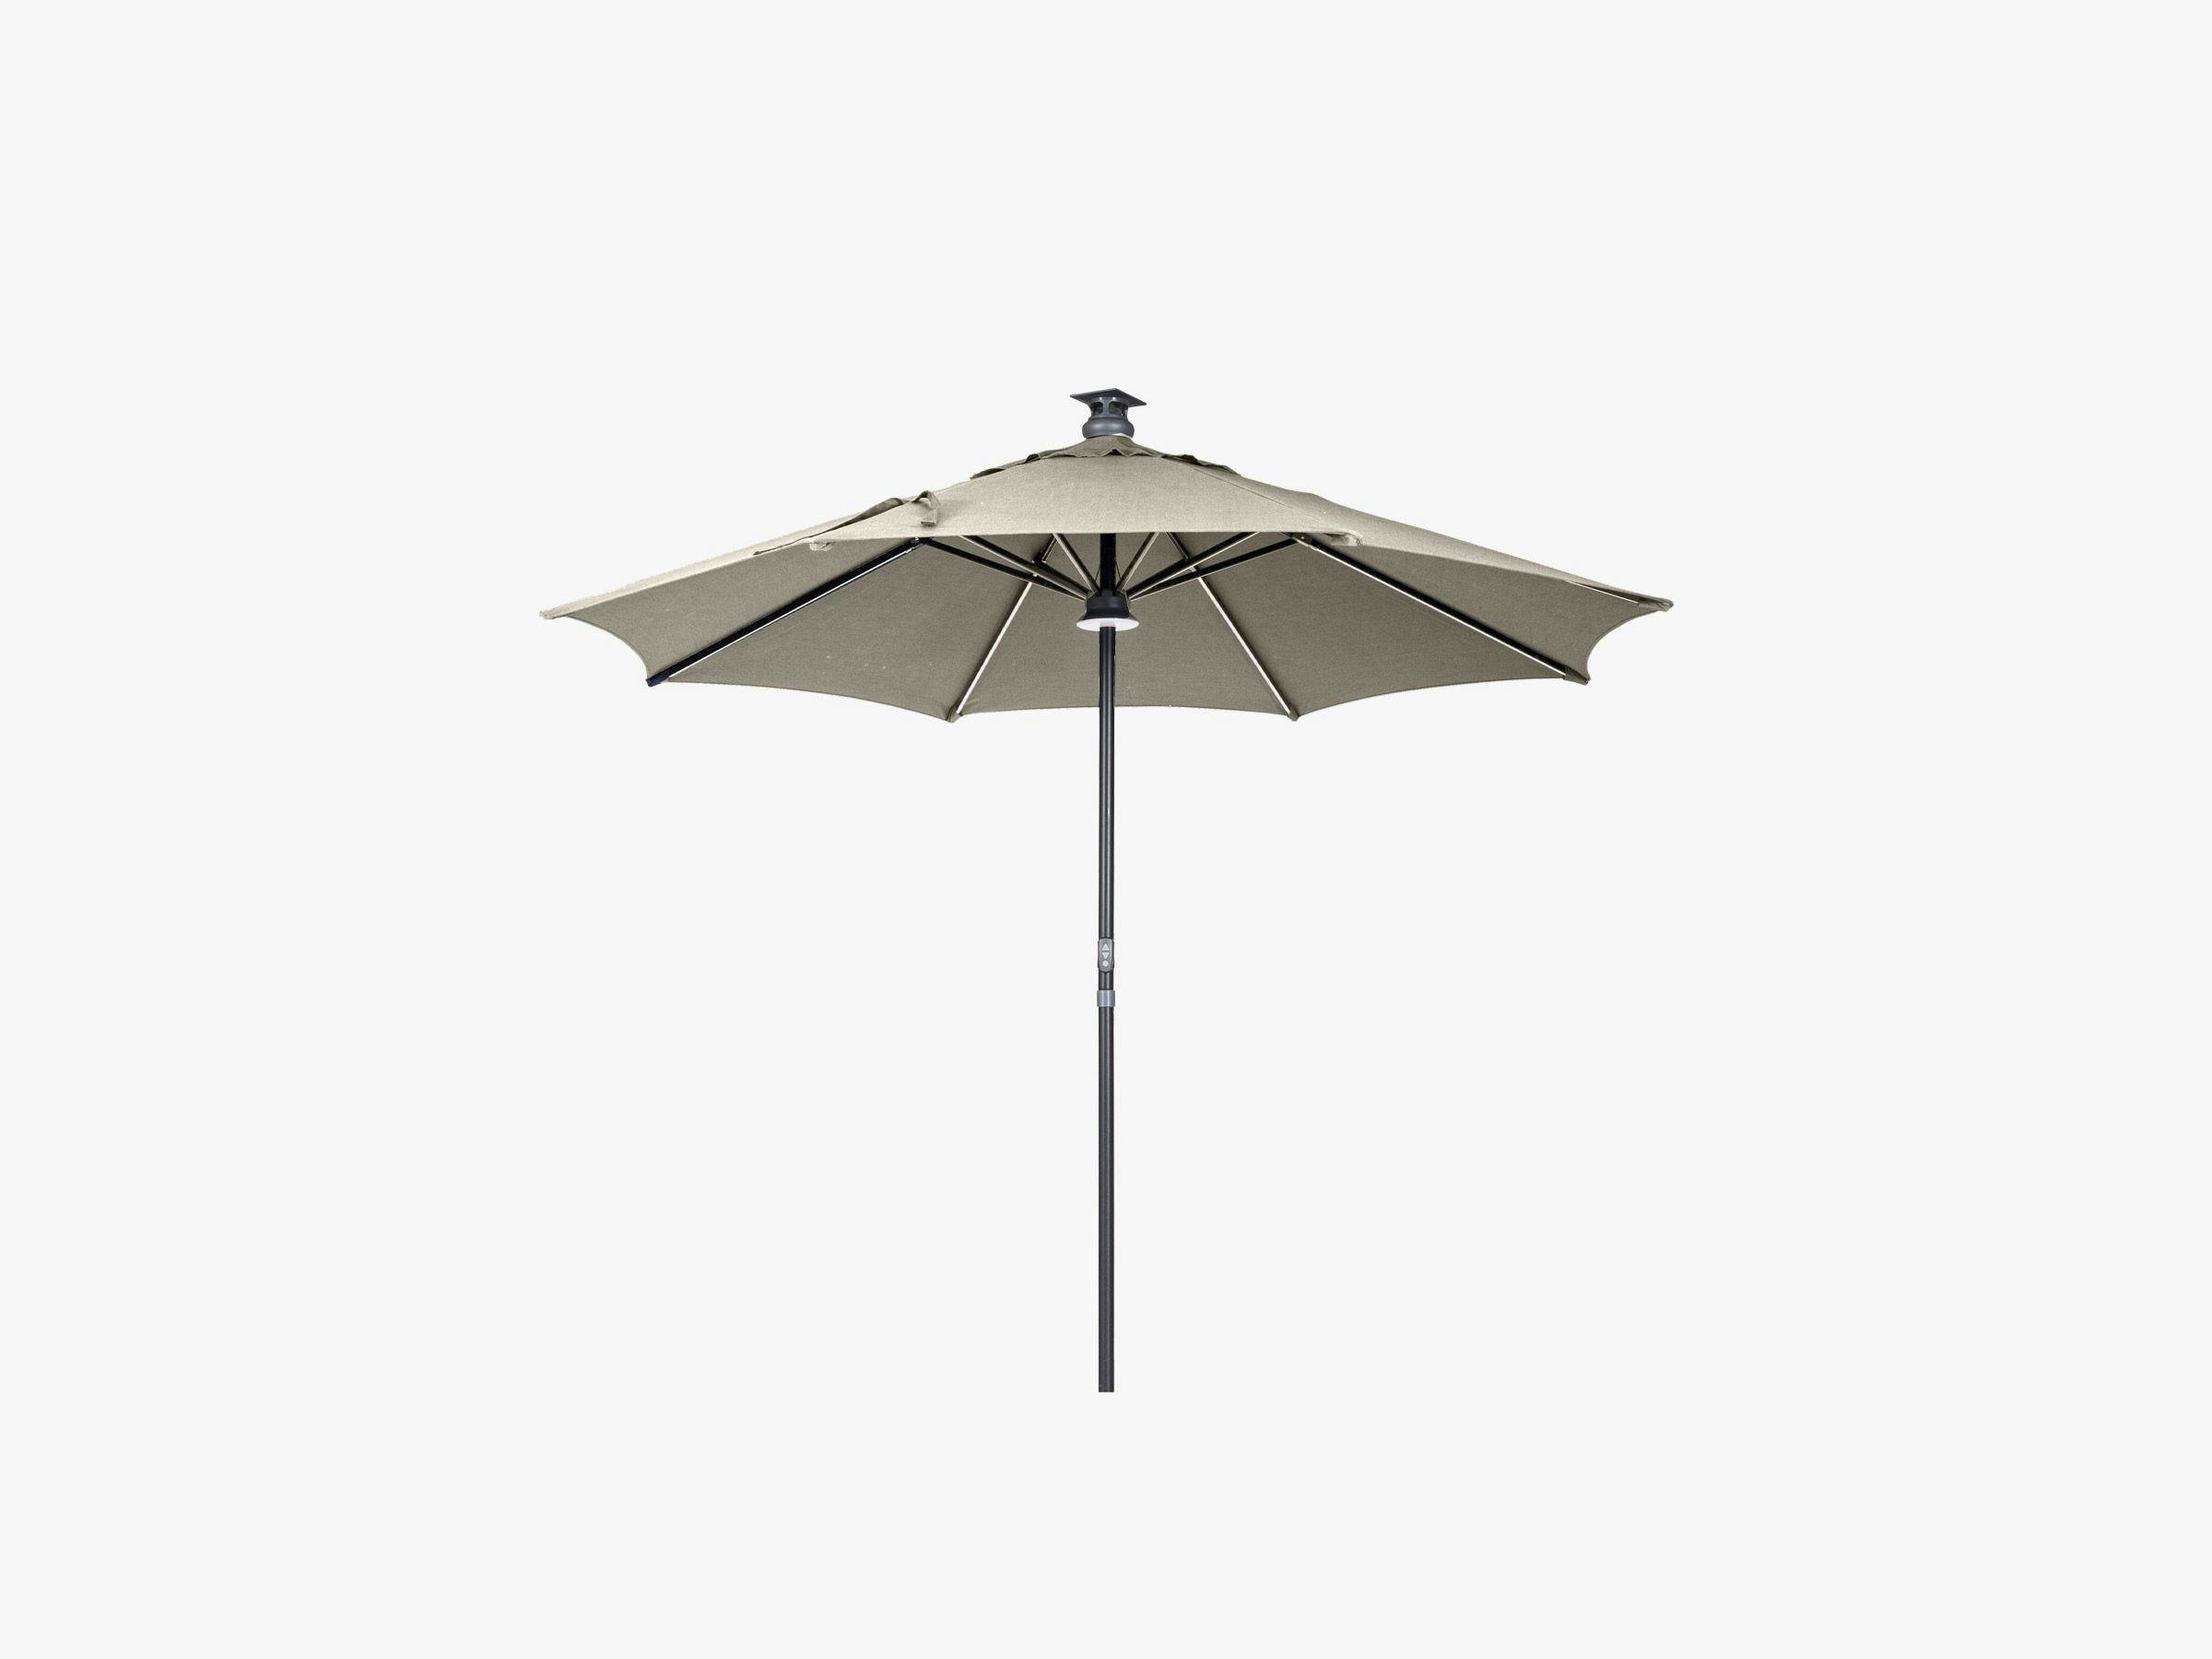 11' Paramount Smart Octagonal Umbrella (Sunbrella Dove fabric)